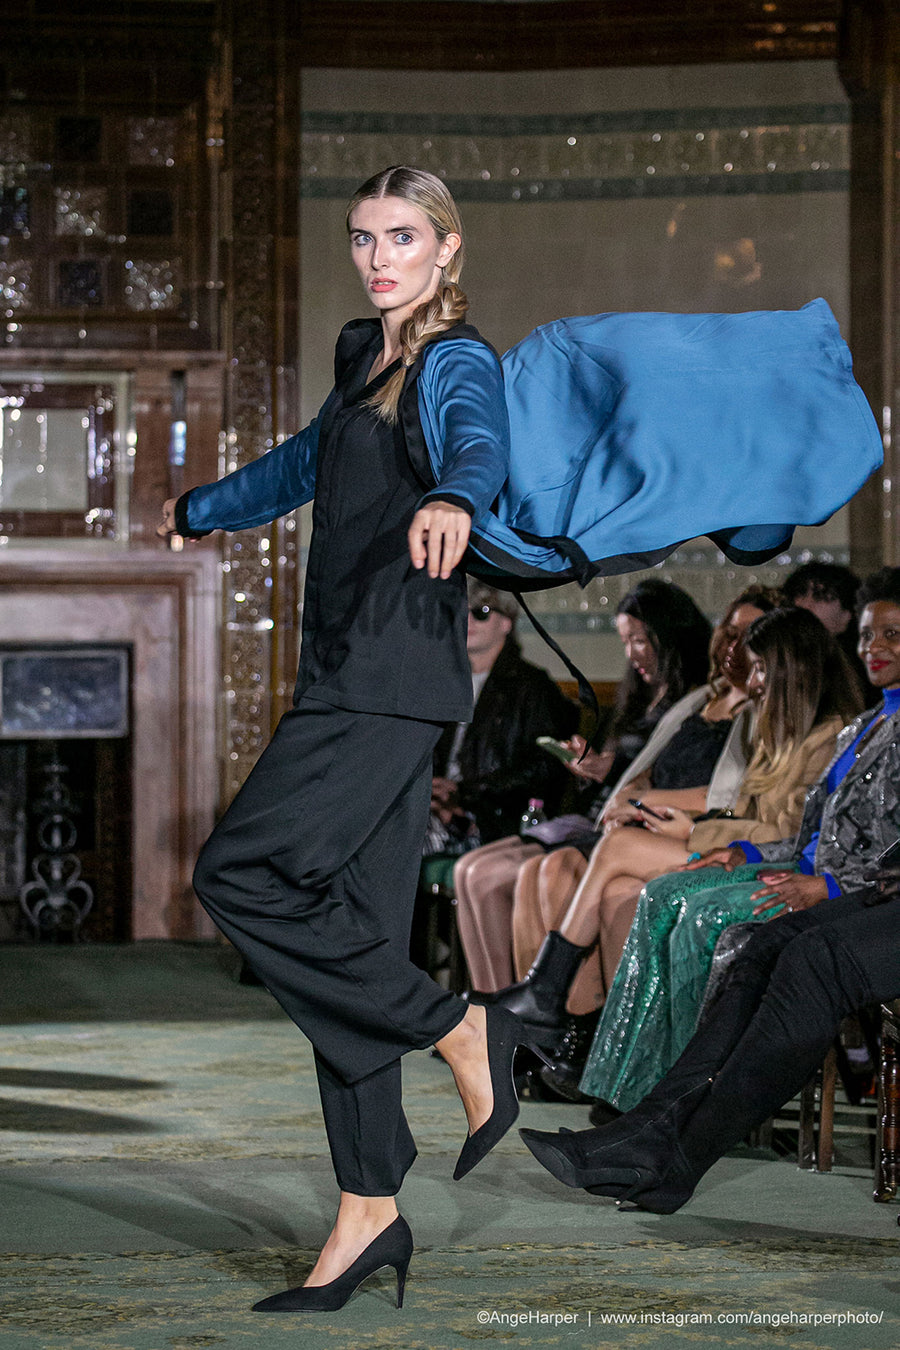 Women's loungewear - Black and blue vegan silk nightgown